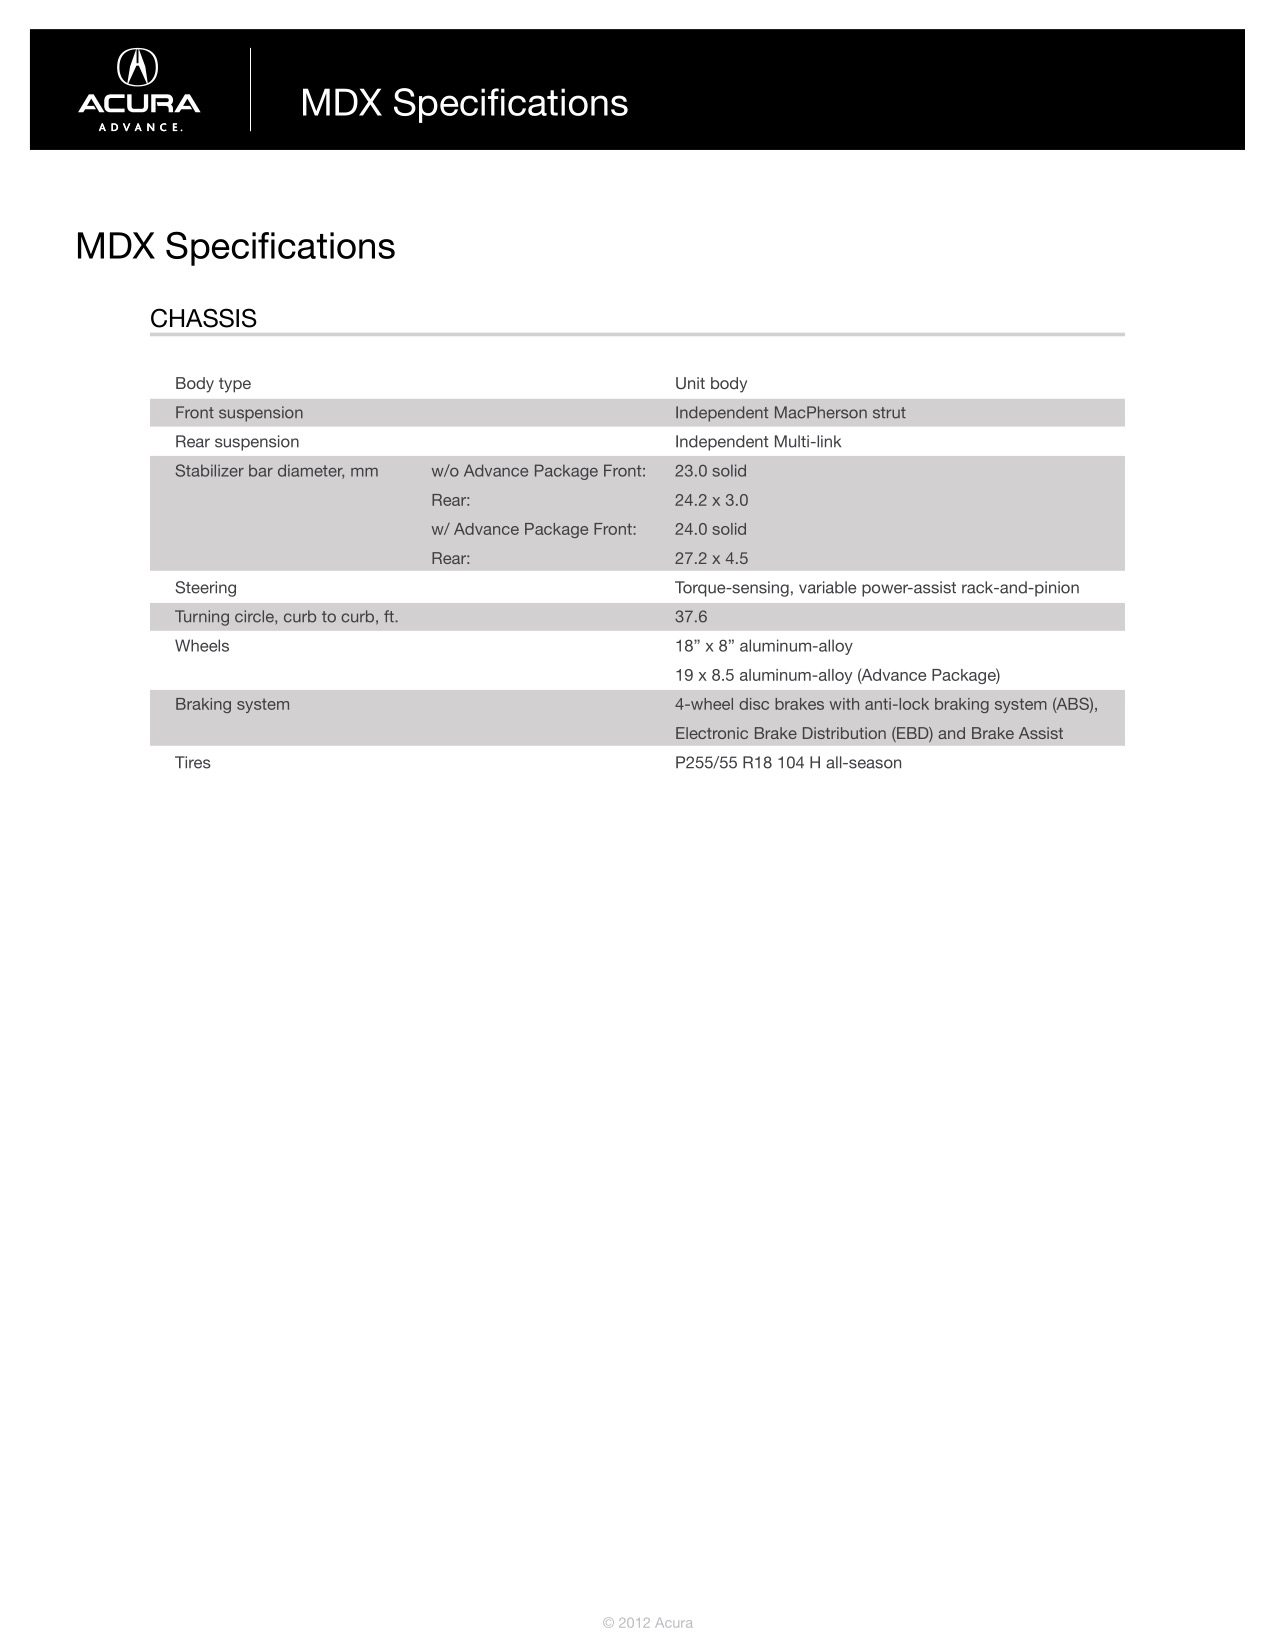 2013 Acura MDX Brochure Page 22